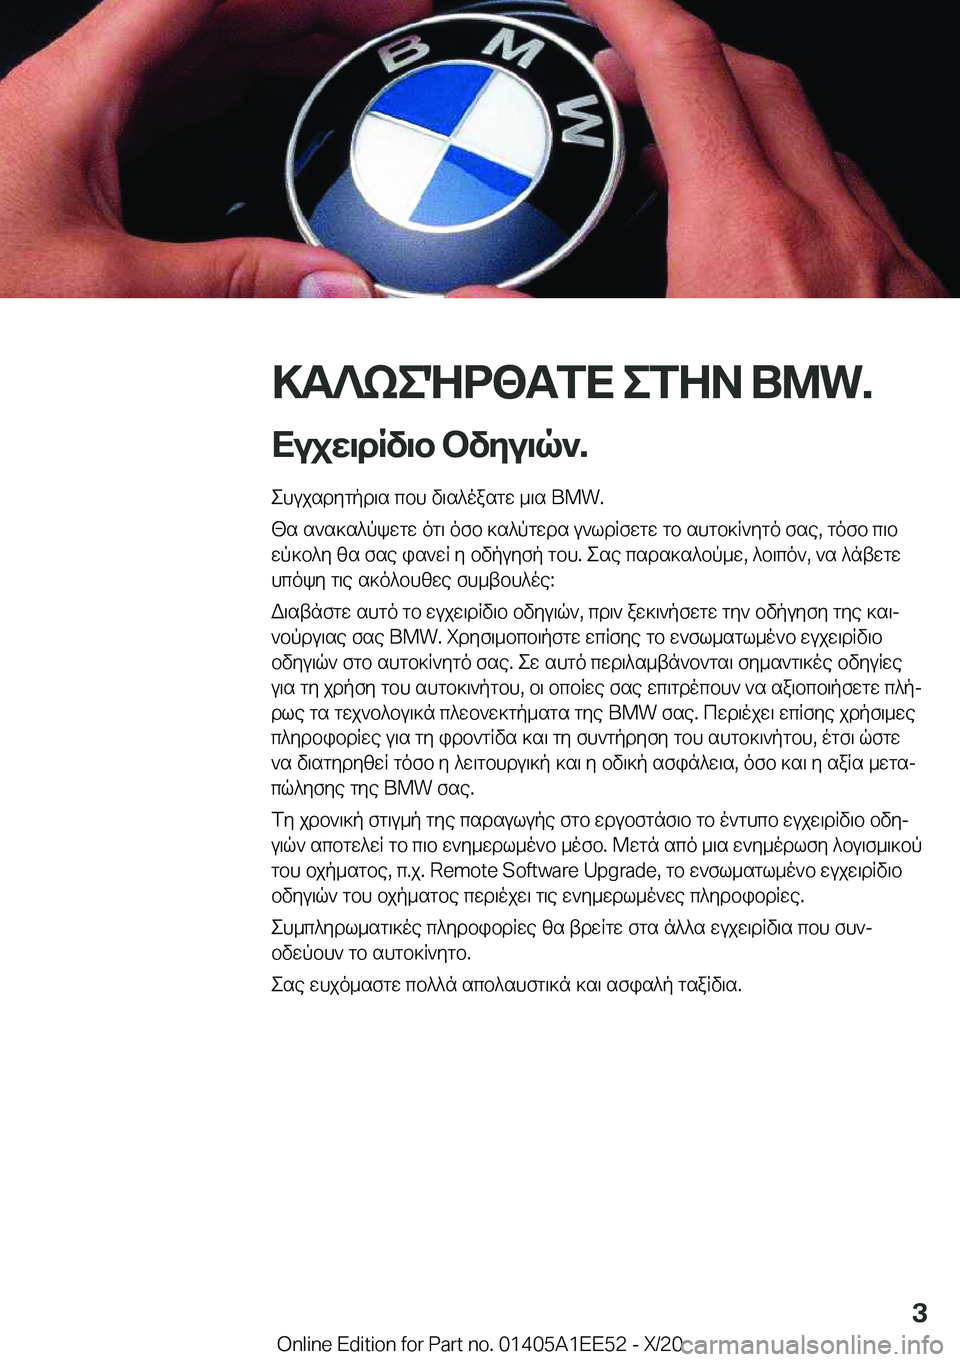 BMW 8 SERIES CONVERTIBLE 2021  ΟΔΗΓΌΣ ΧΡΉΣΗΣ (in Greek) >T?keNd<TfX�efZA��B�M�W�.
Xujw\dRv\b�bvyu\q`�. ehujsdygpd\s�cbh�v\s^oasgw�_\s��B�M�W�.
[s�s`s]s^pkwgw�og\�ofb�